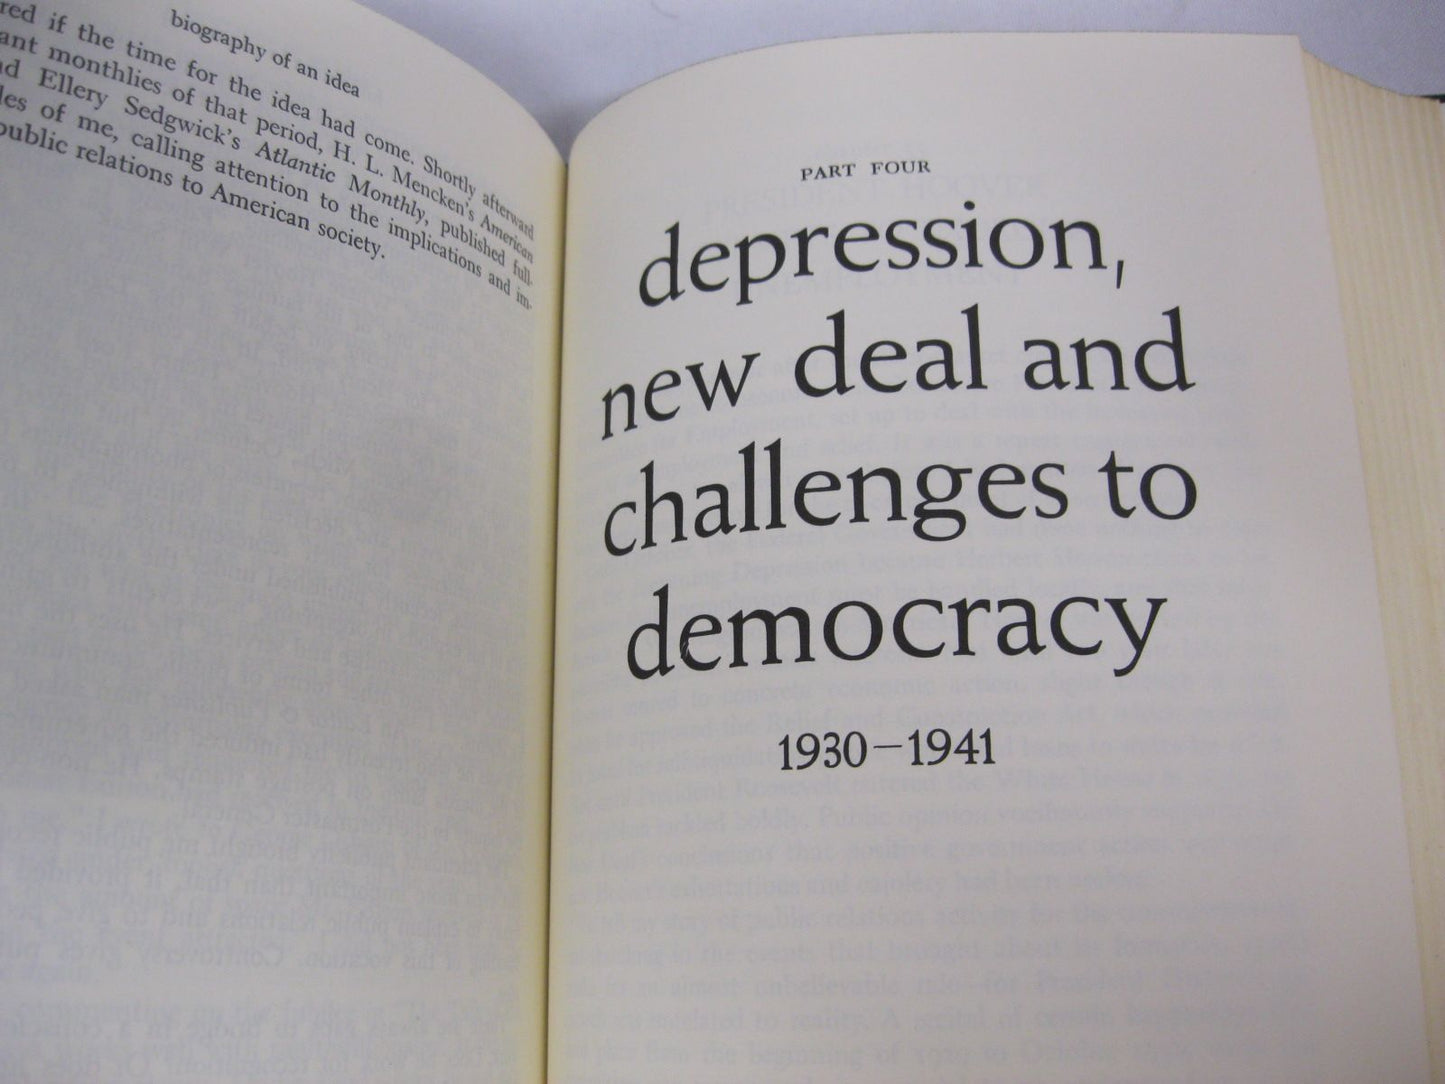 Biography of an Idea Public Relations by Edward Bernays